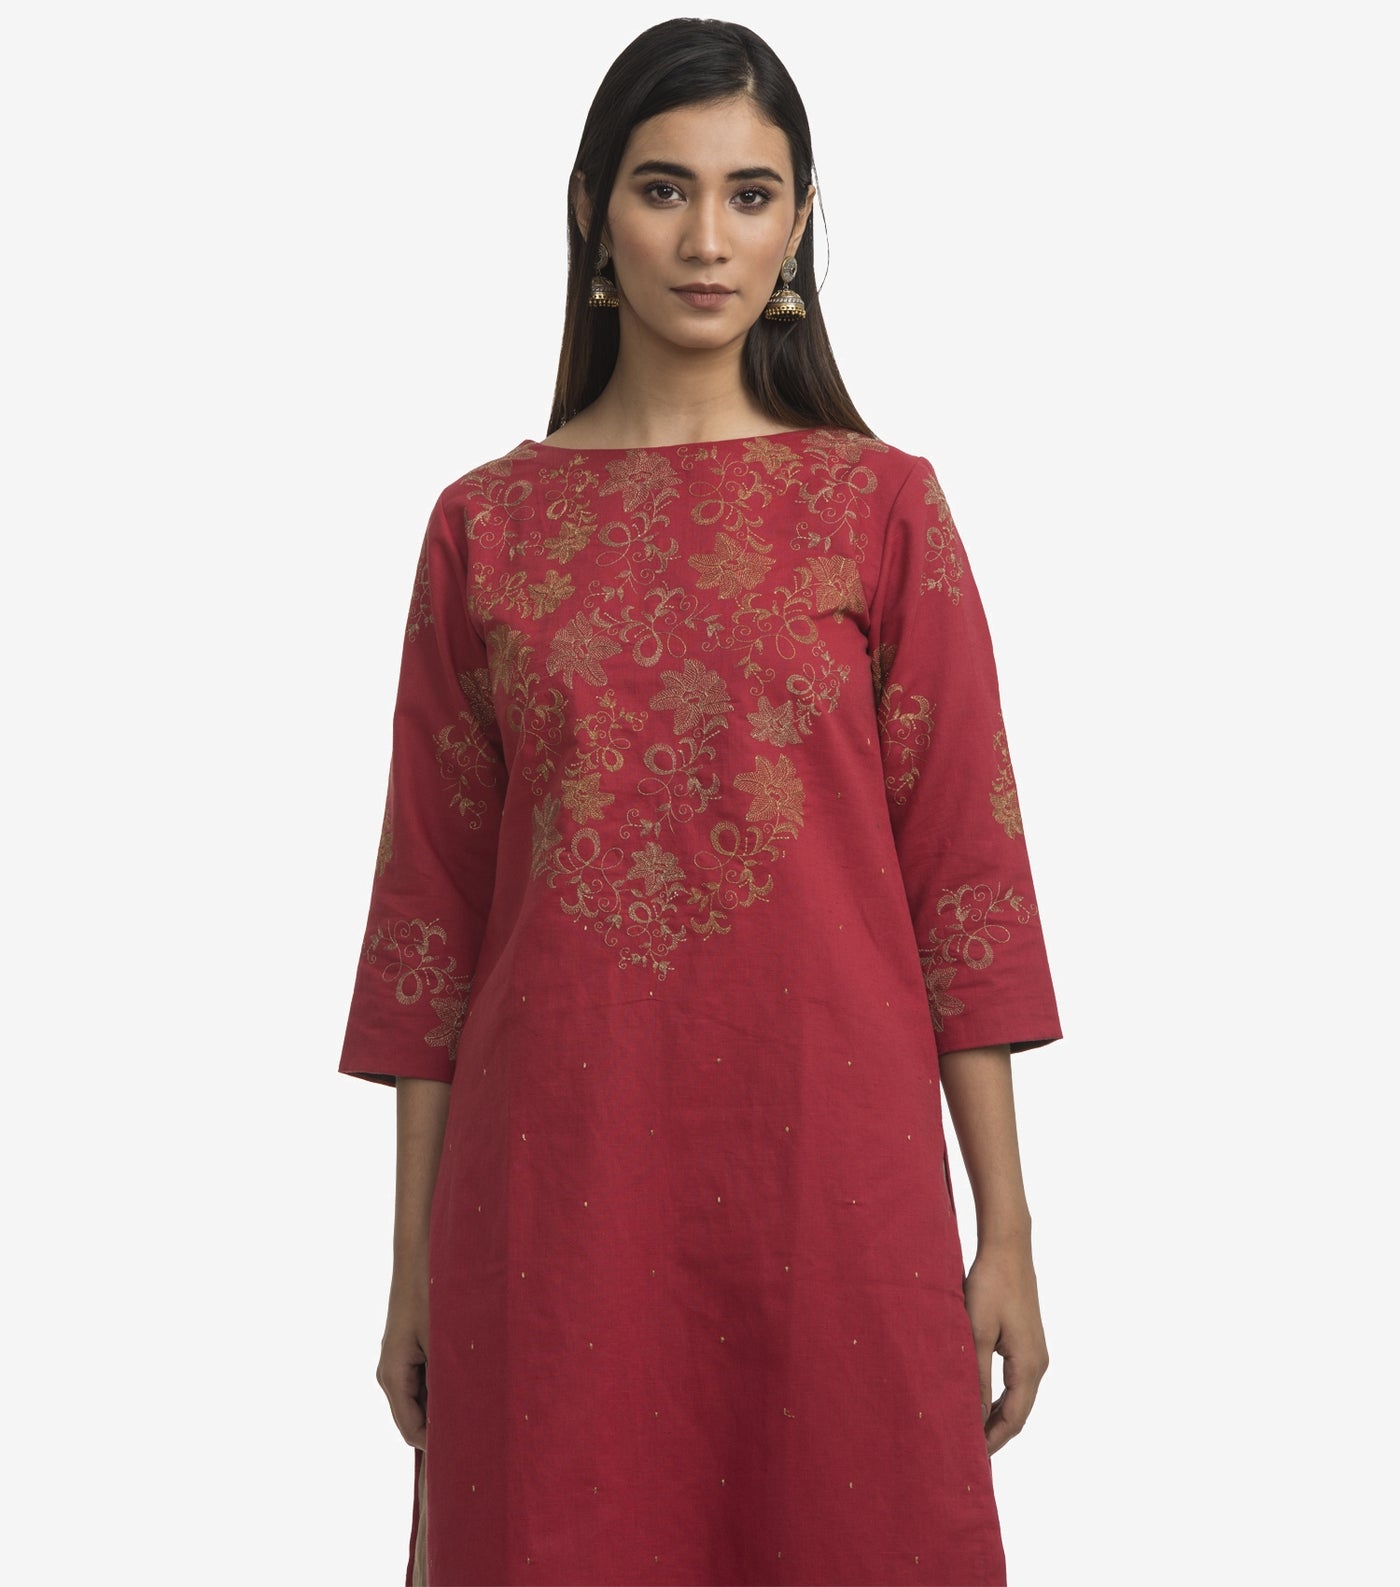 Red embroidered cotton linen kurta